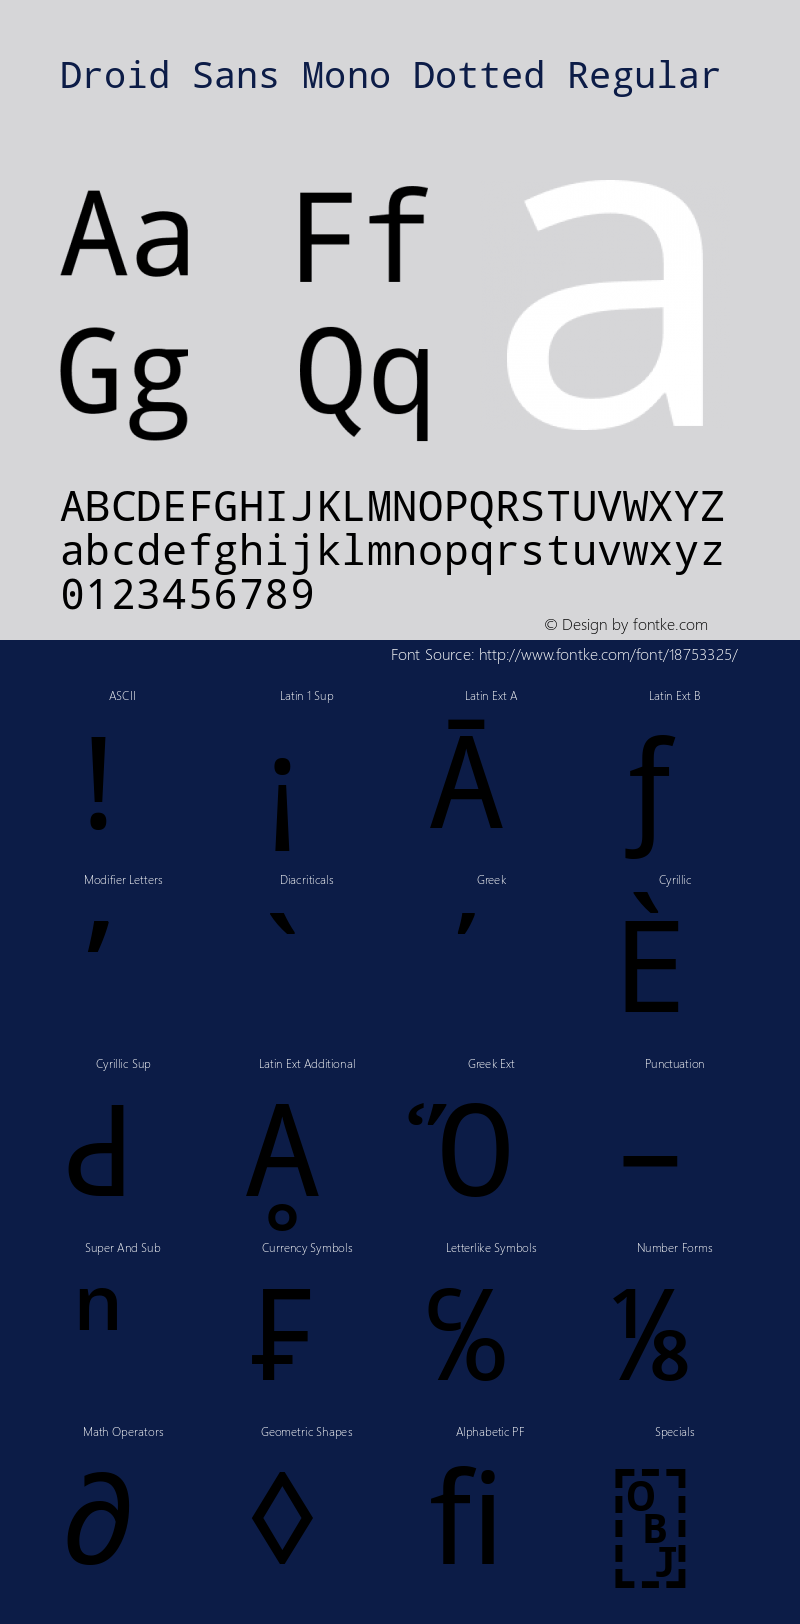 Droid Sans Mono Dotted Regular Version 1.00 build 112 Font Sample